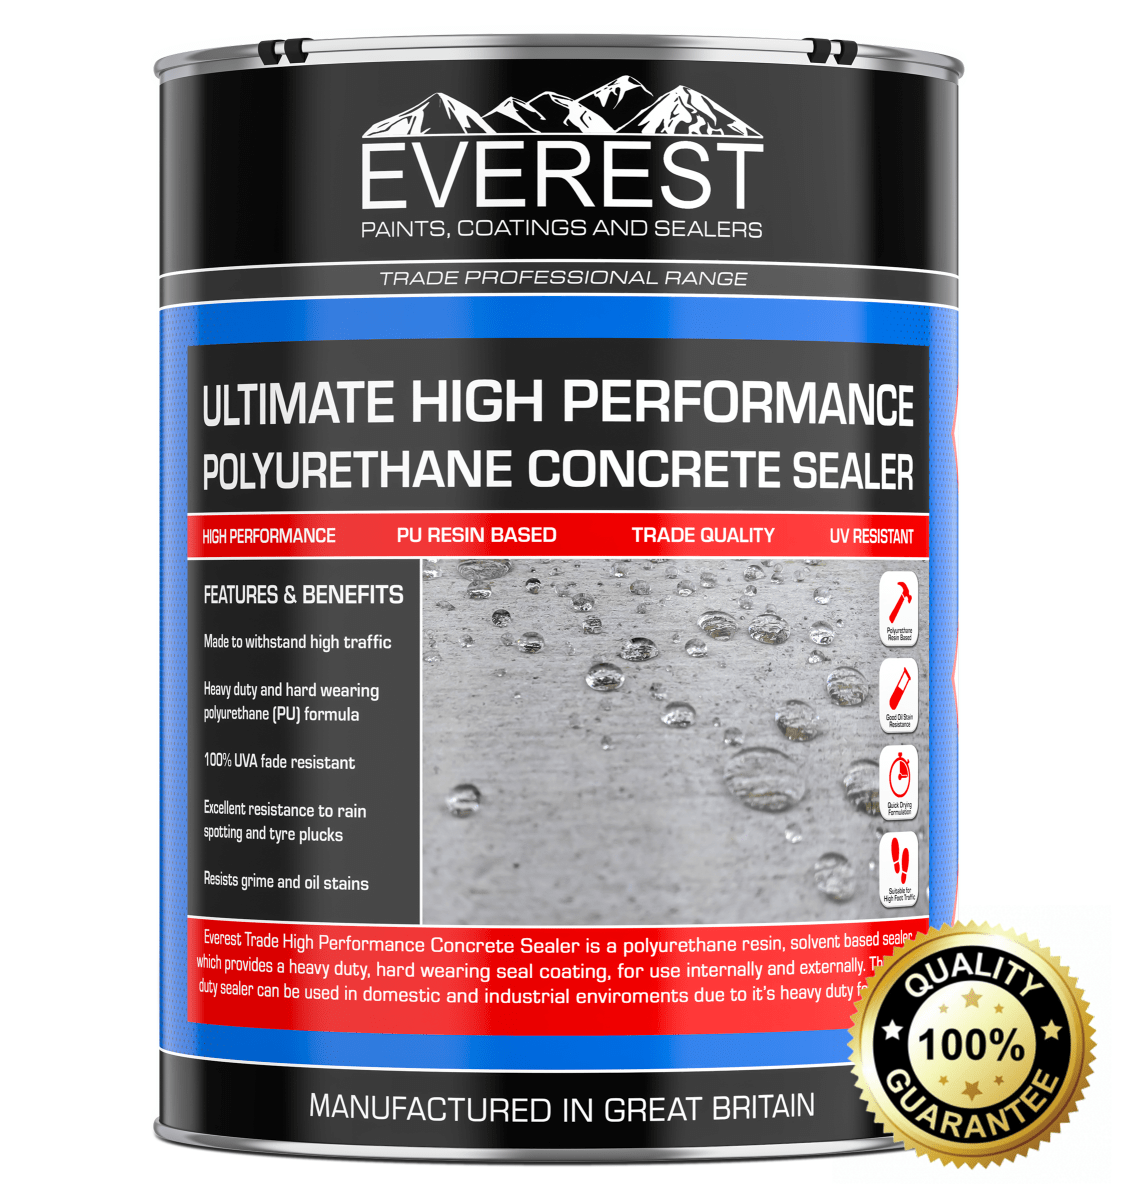 Everest Polyurethane Concrete Sealer